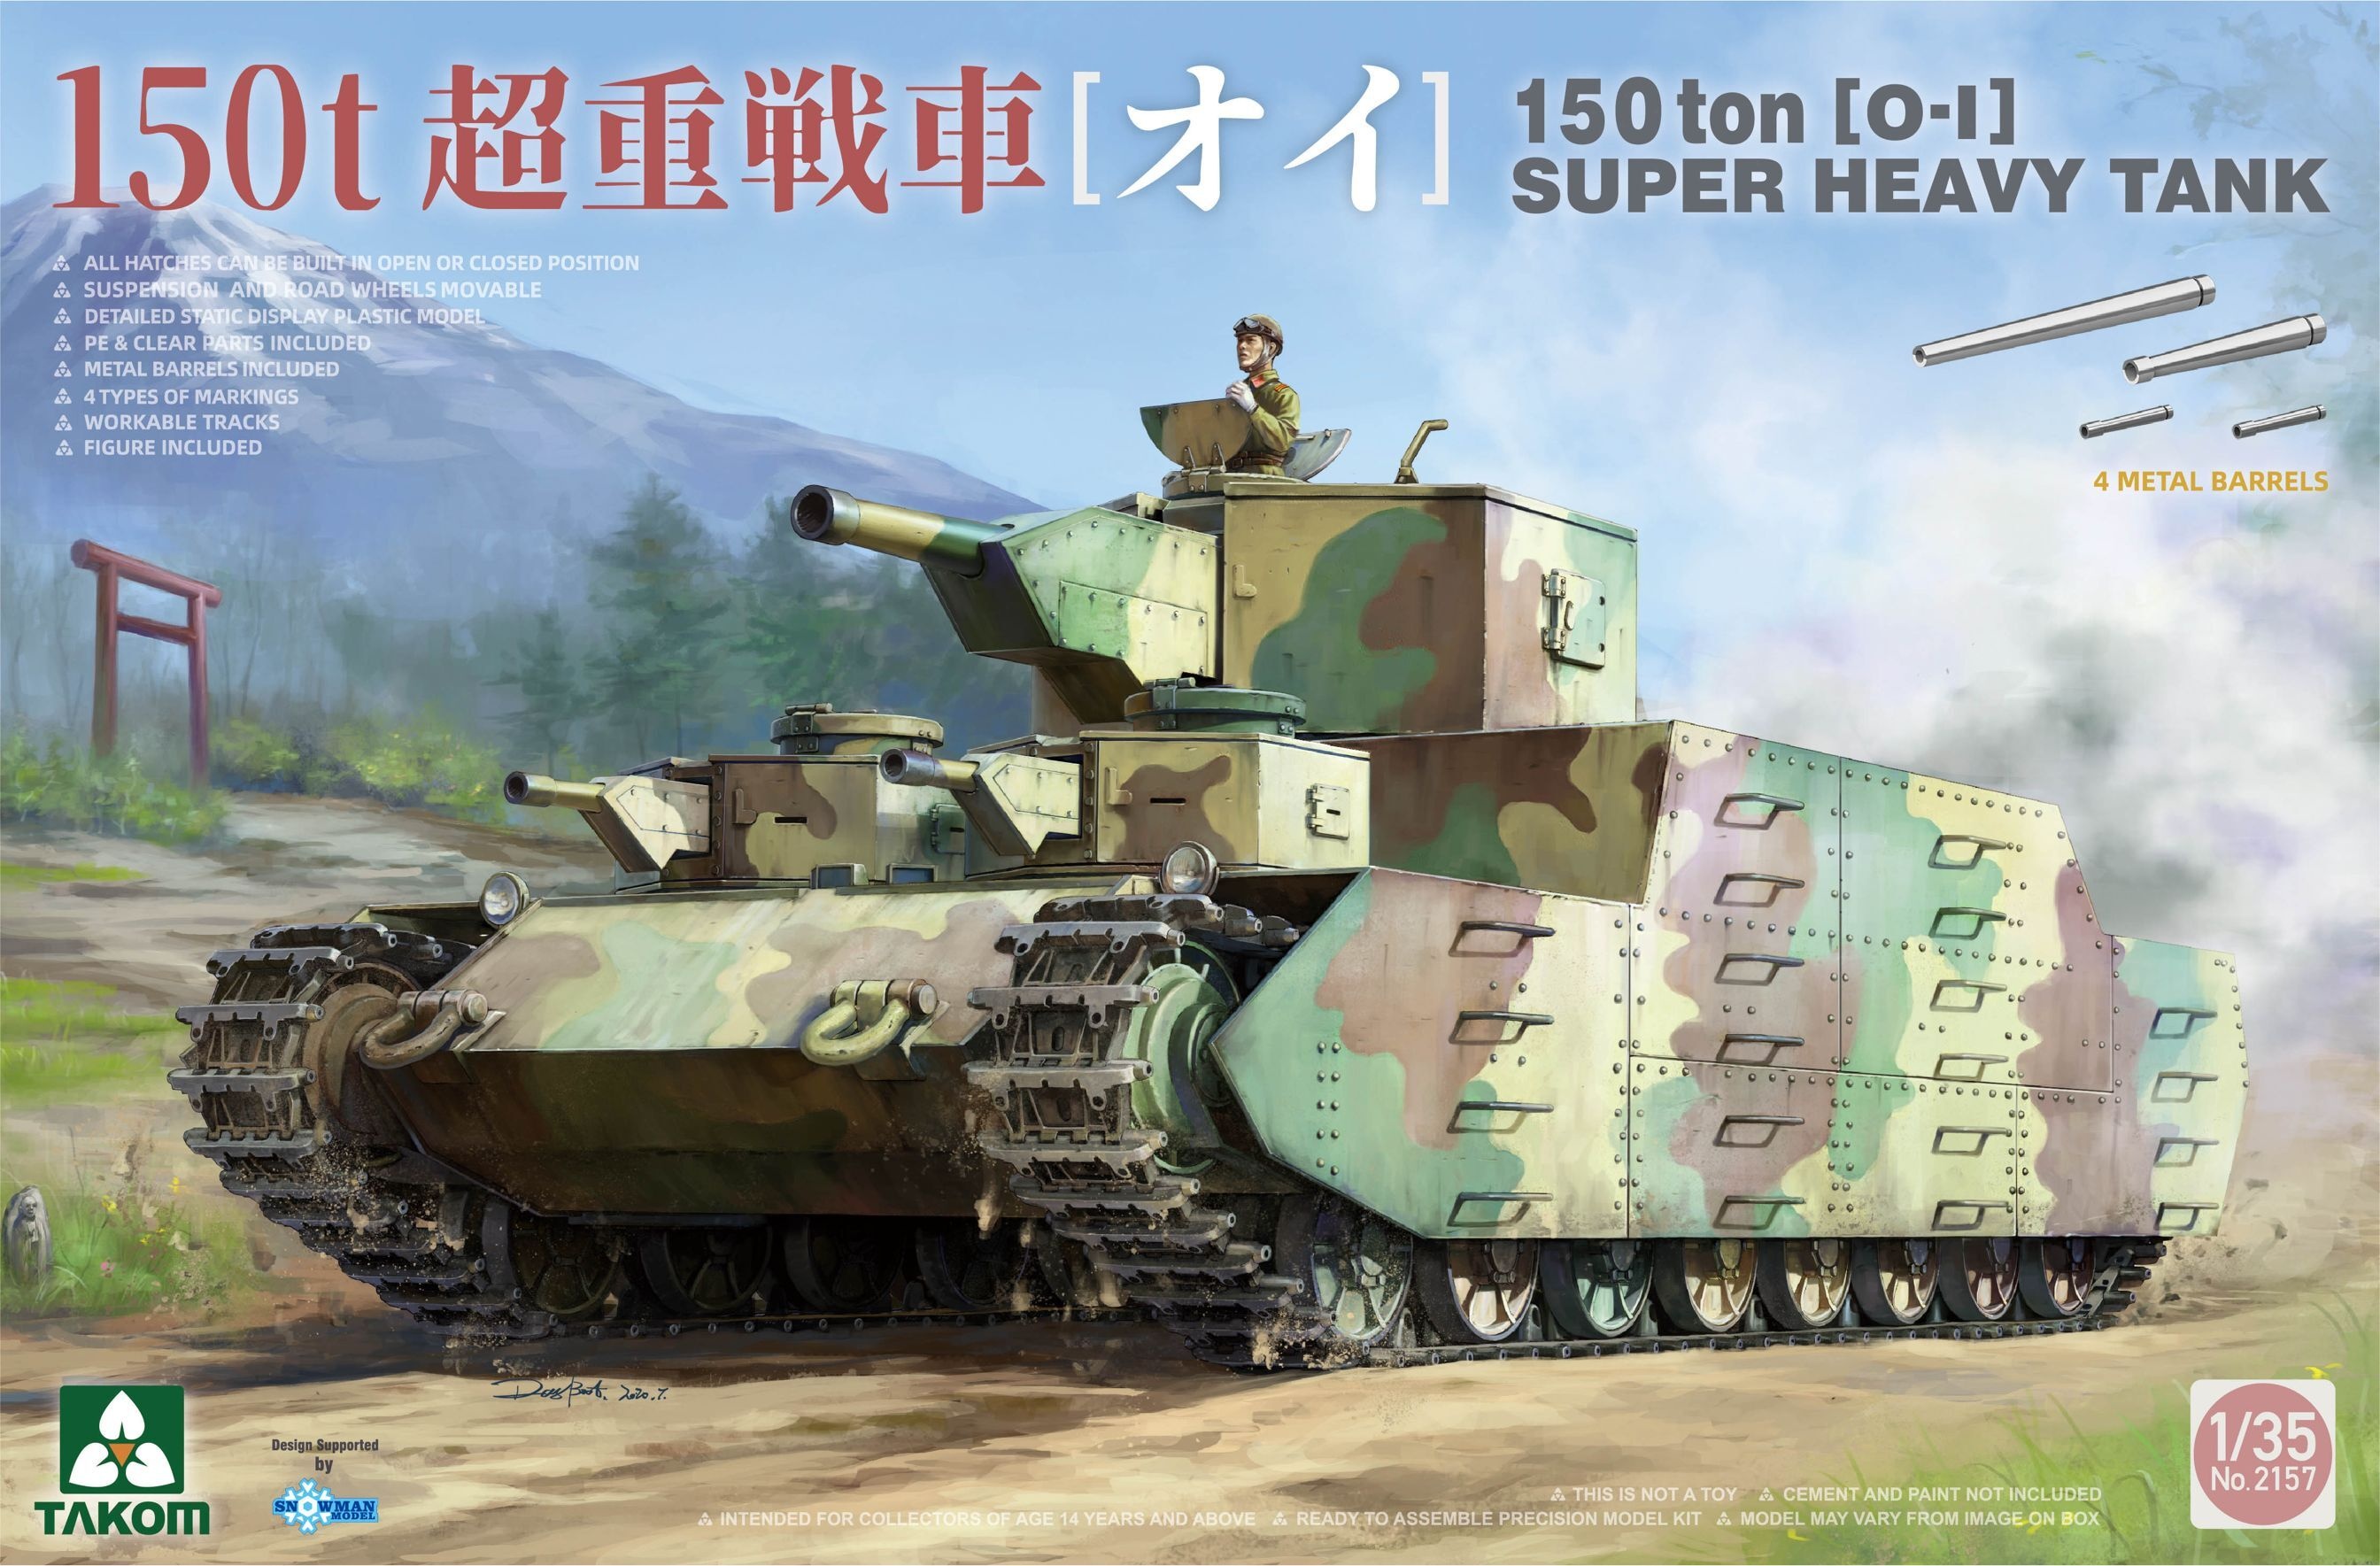 150 Ton [0-1] Super Heavy Tank